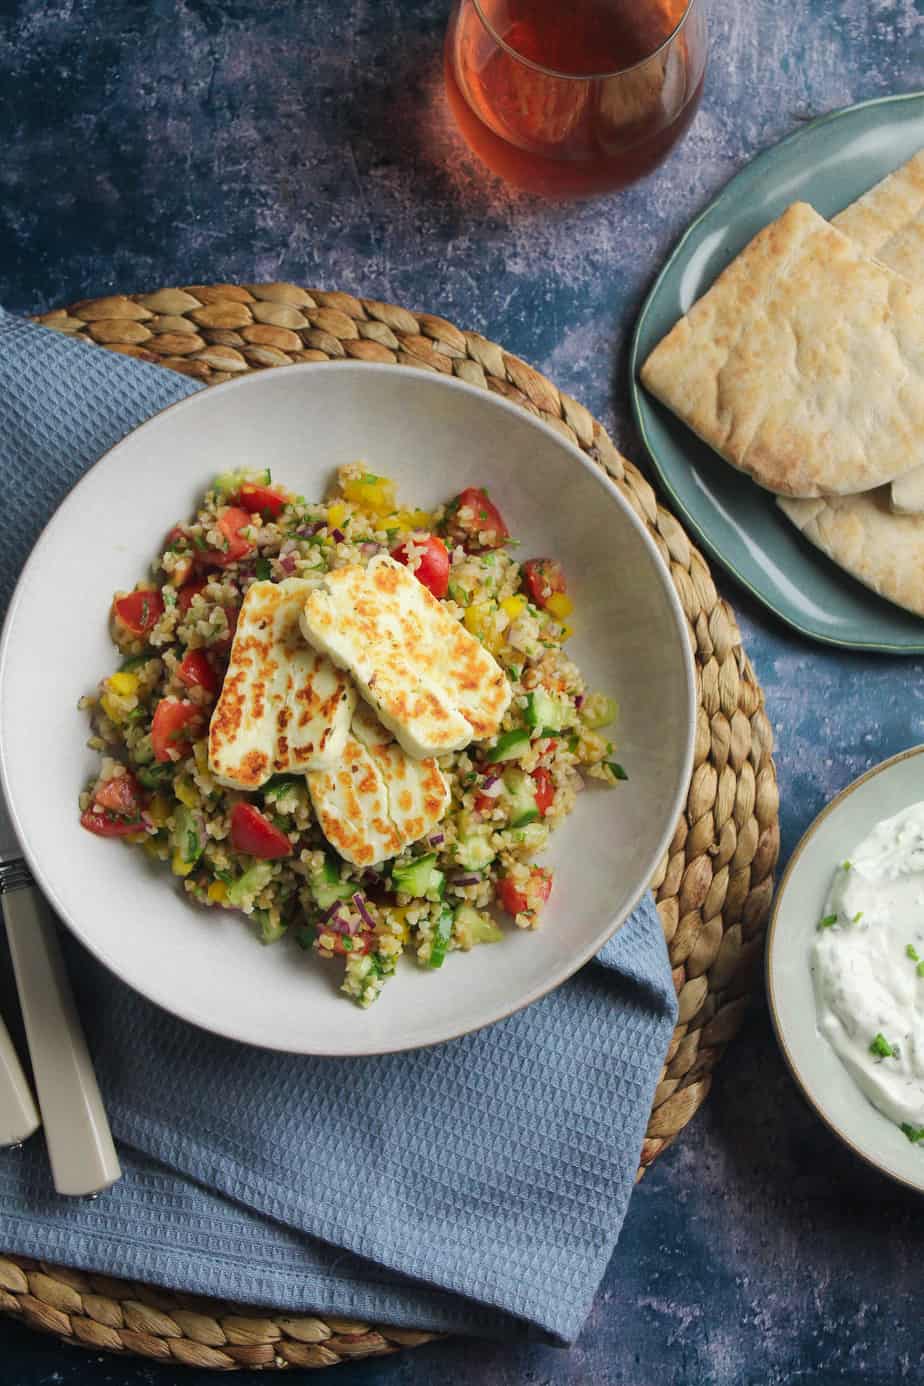 Mediterranean Halloumi and Bulgur Wheat Salad